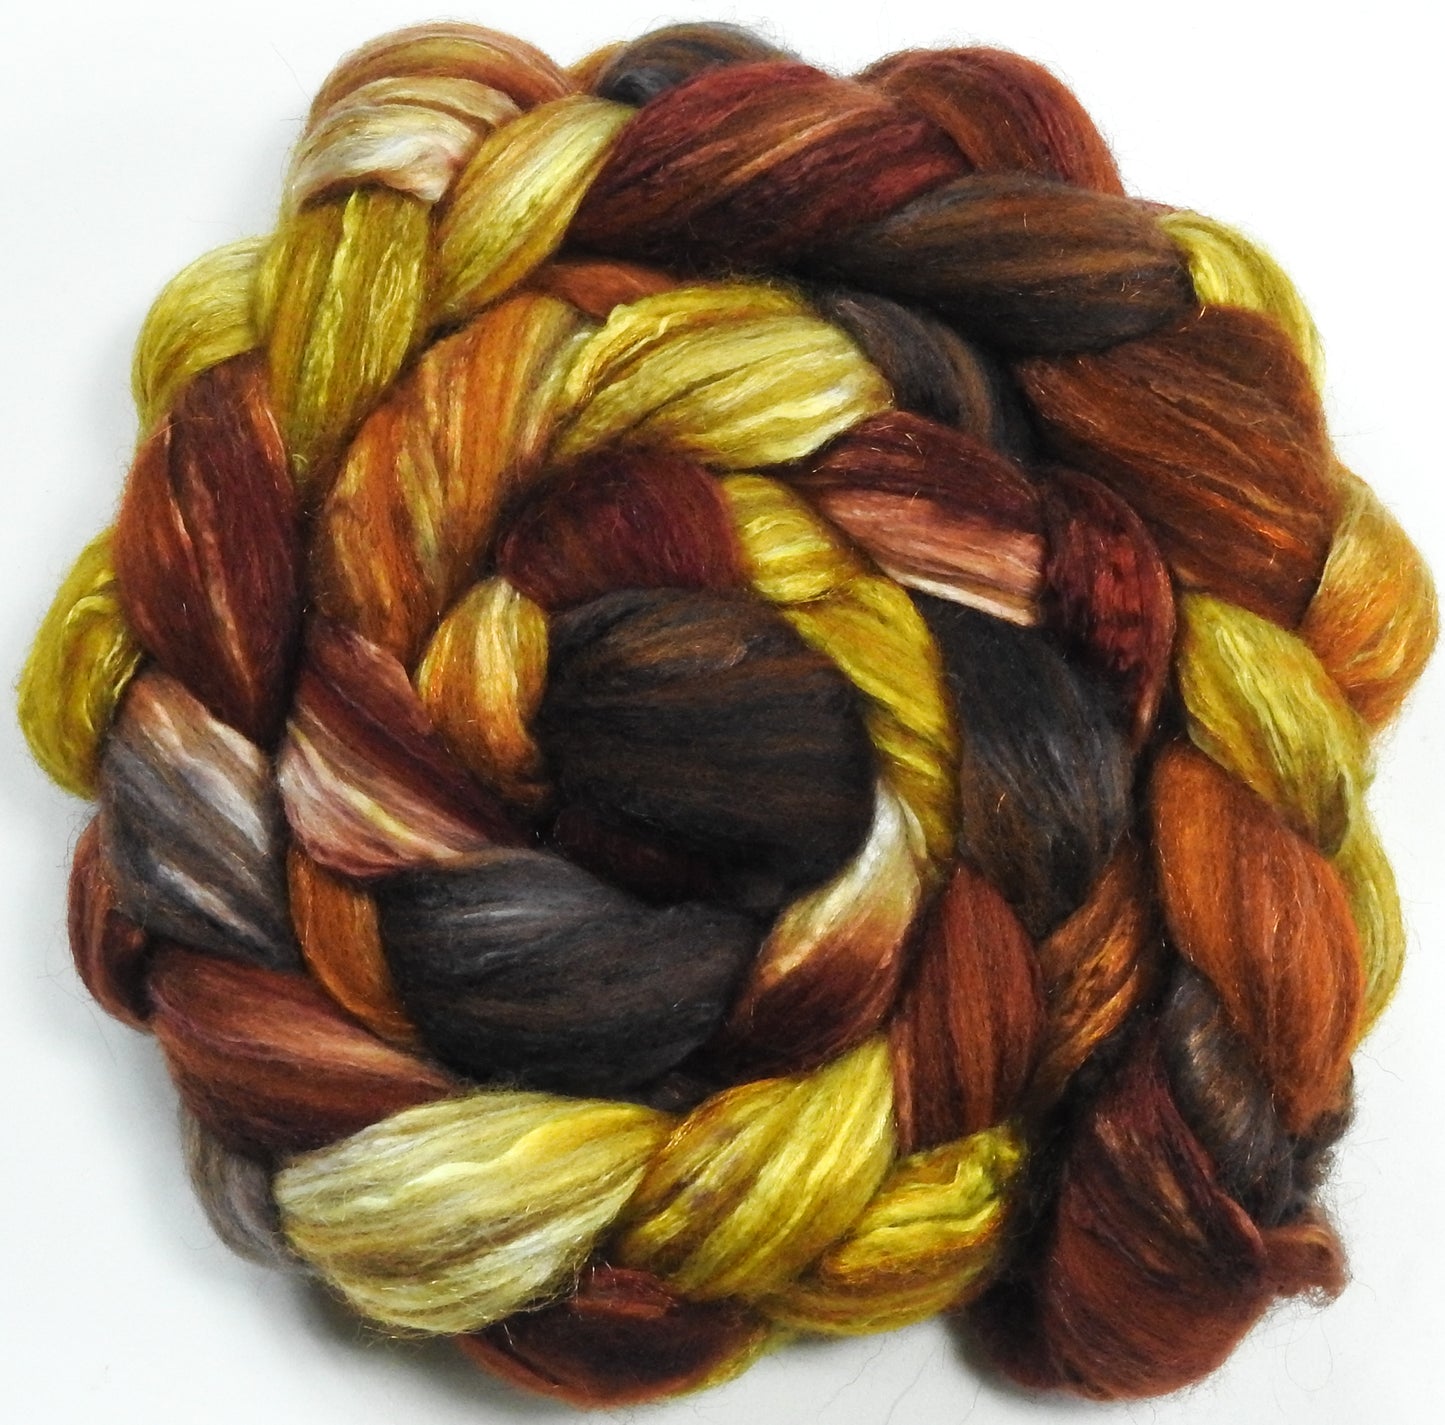 Beechnut - Batt in a Braid #7 - Polwarth/ Manx / Mulberry silk/ Firestar (30/30/30/10)